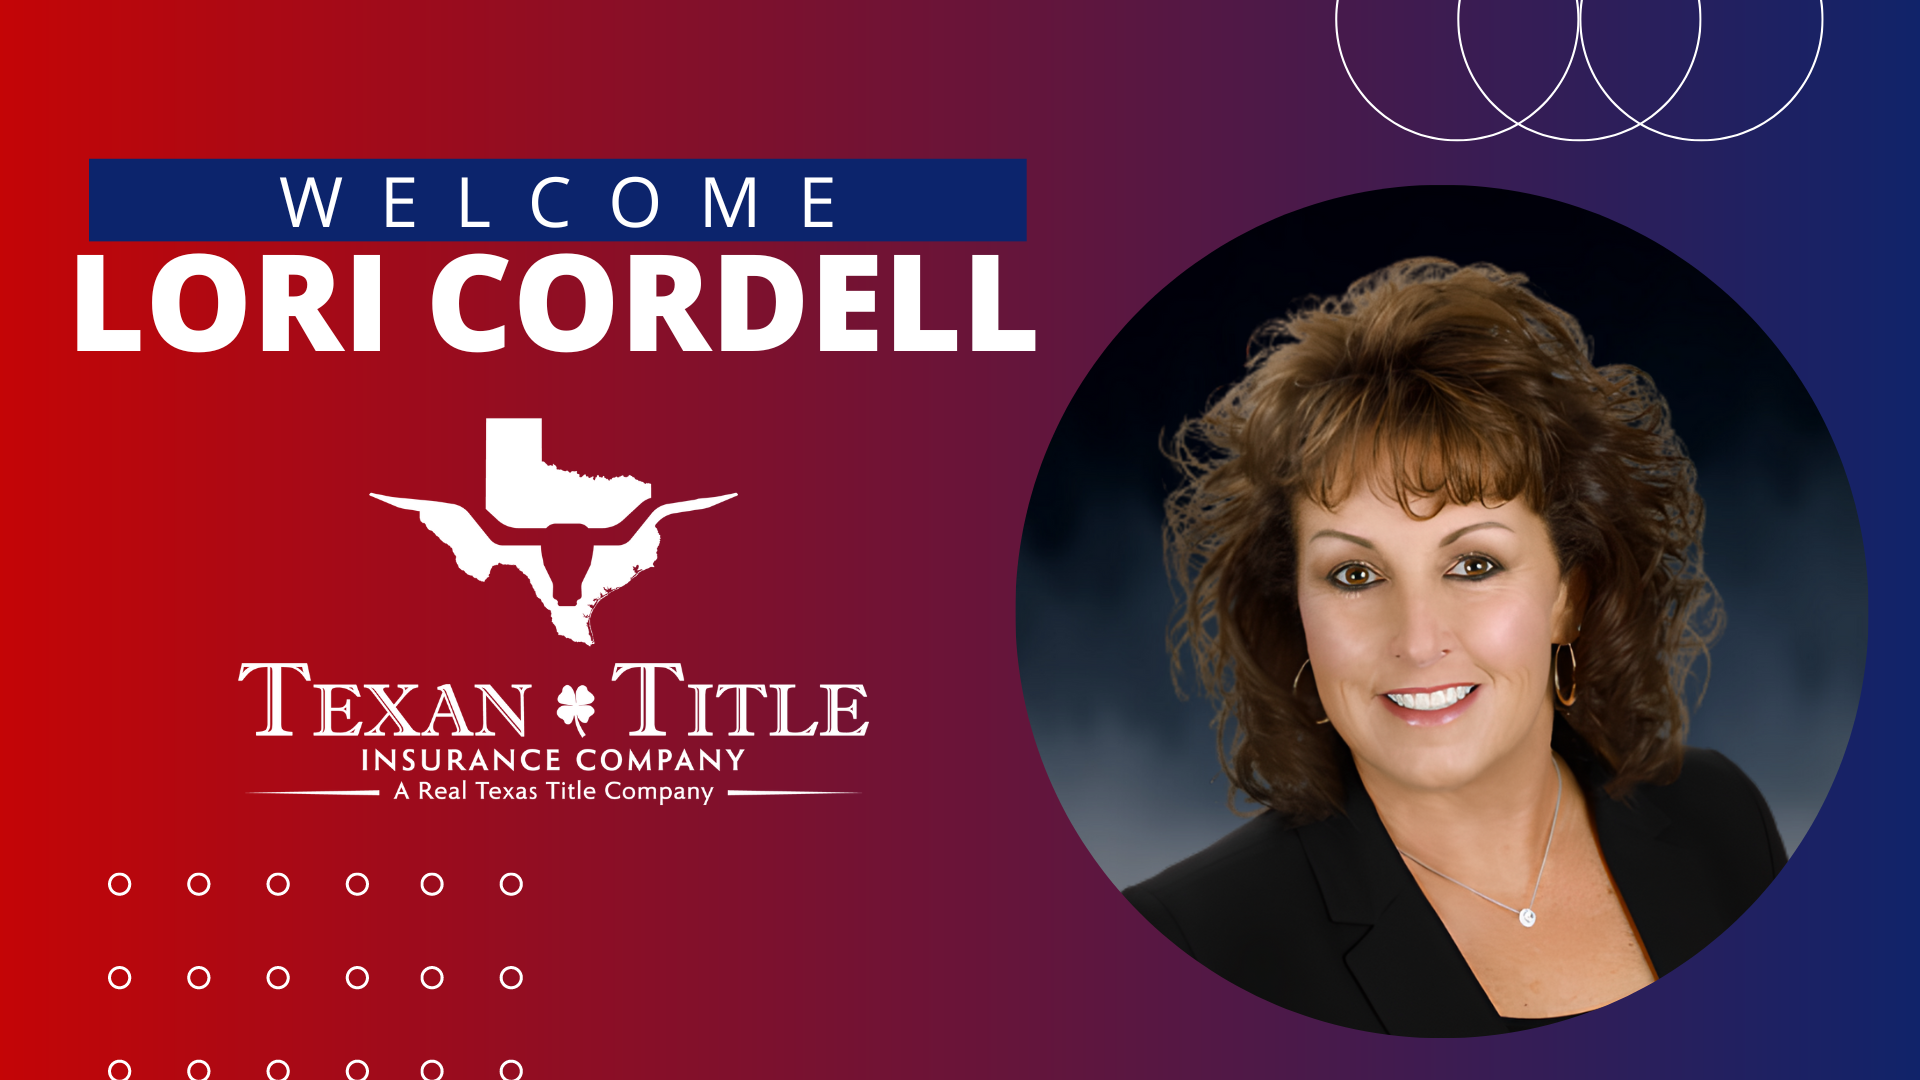 Respected DFW Veteran Lori Cordell joins Texan Title